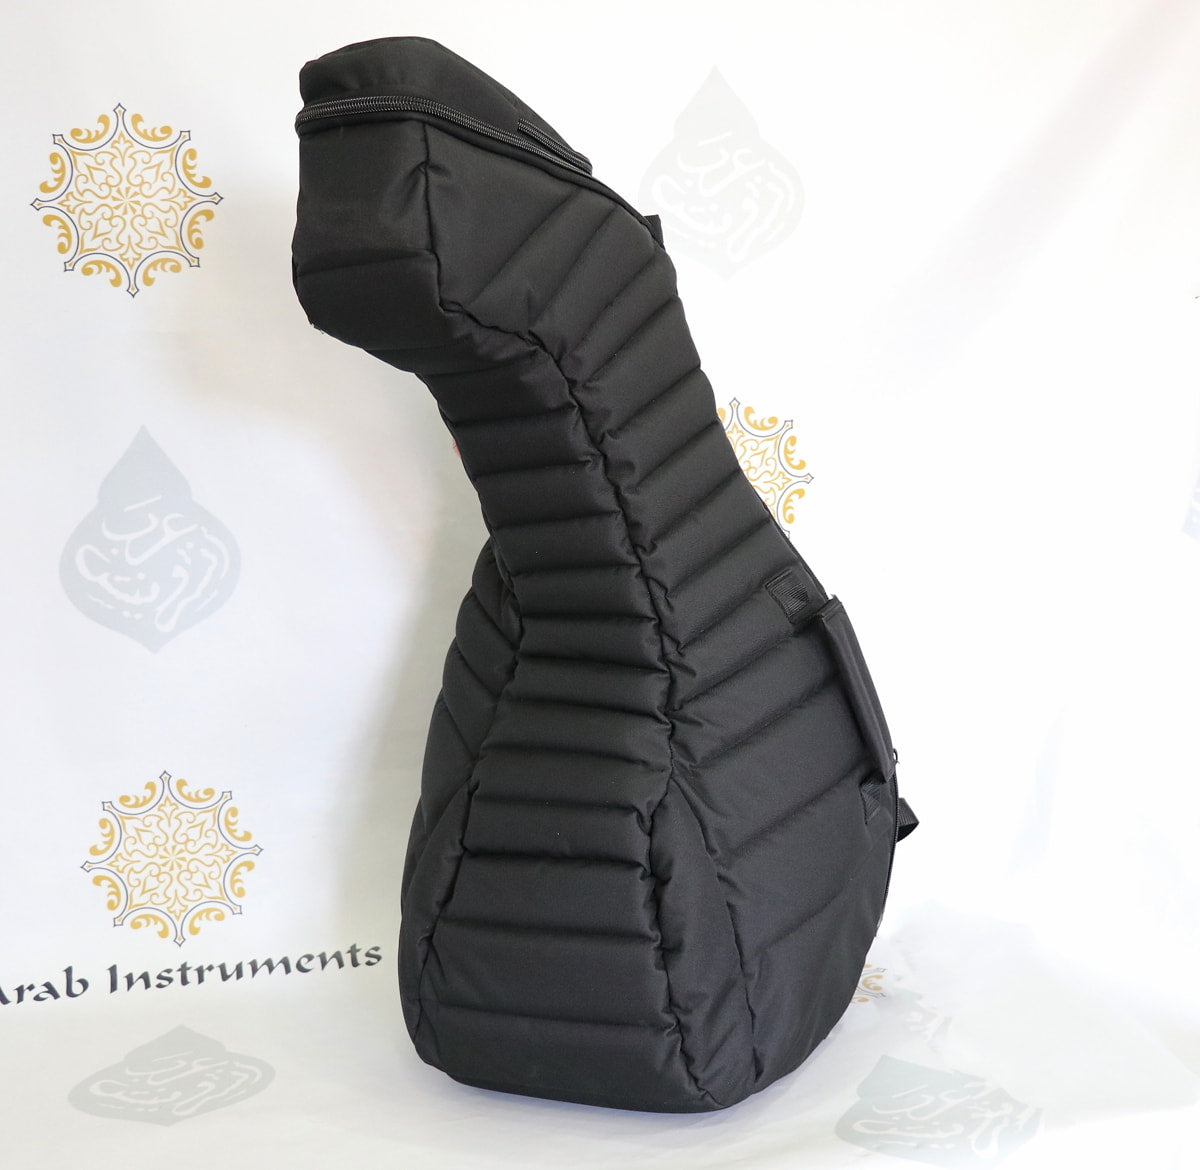 Arab Instruments First Class Oud Case / Bag - Black